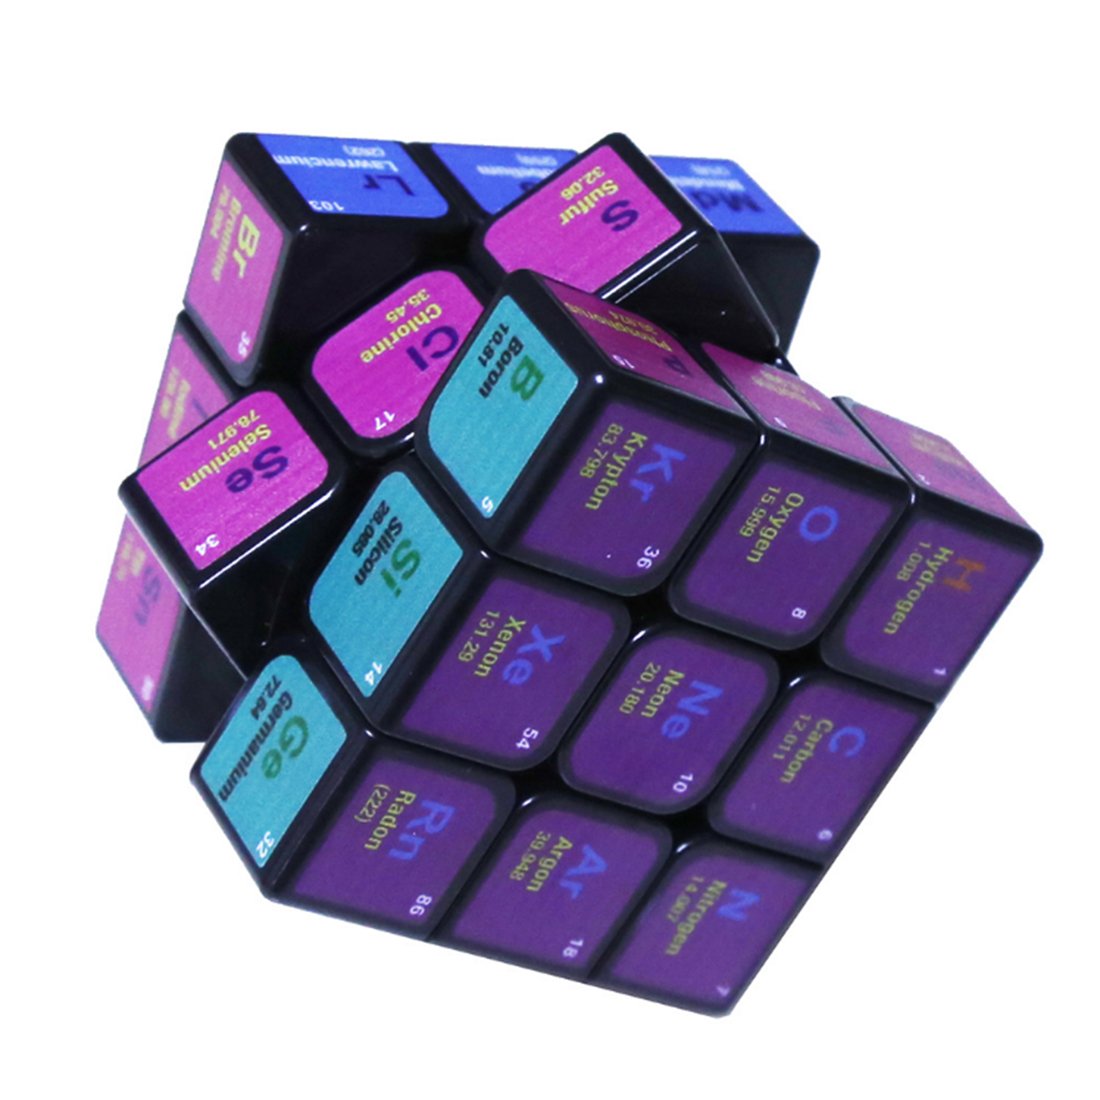 UV Chemical Element 3x3 Cube